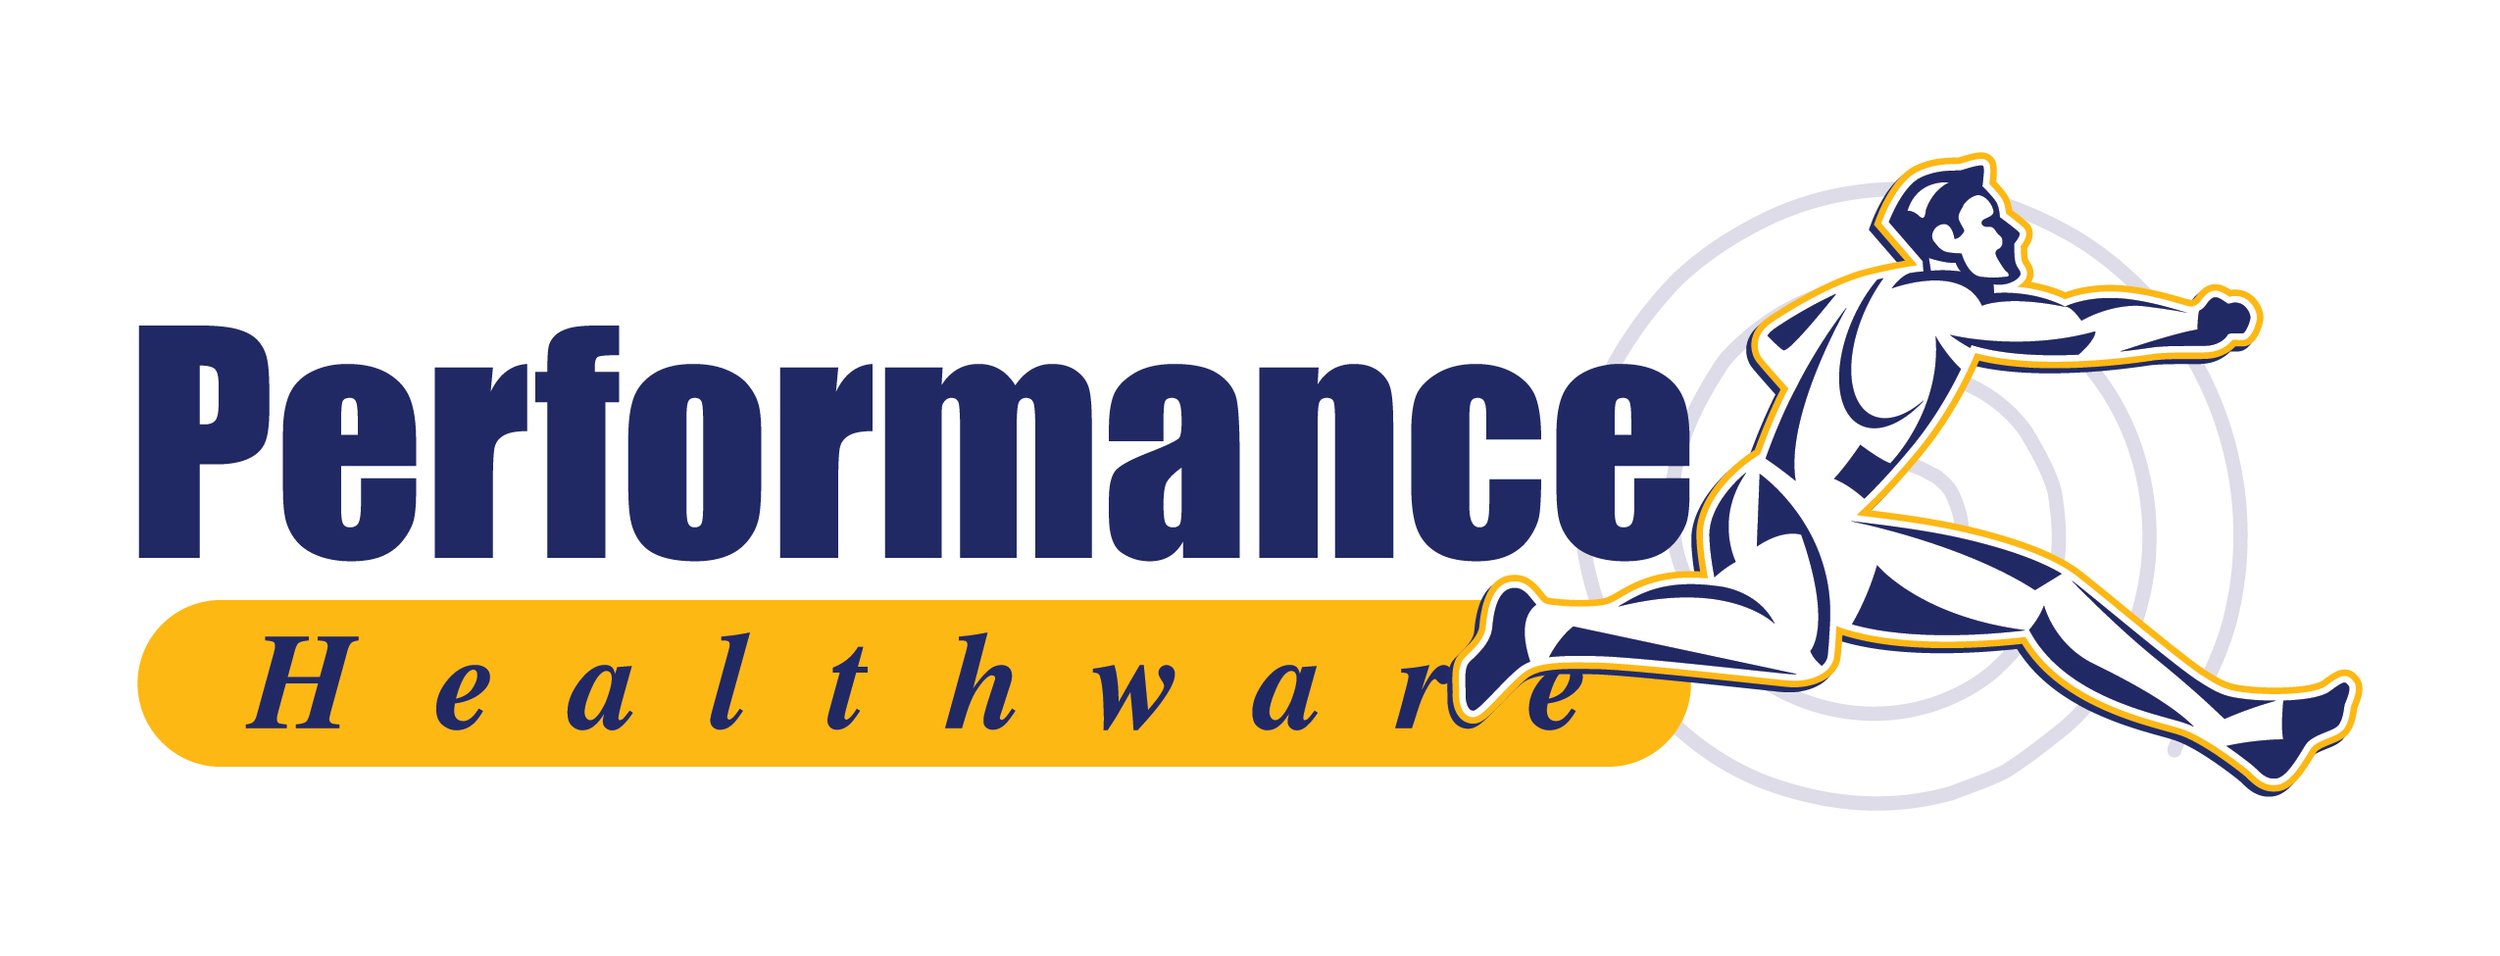 Performance Healthware Logo DK blue yellow-01 (1).jpg